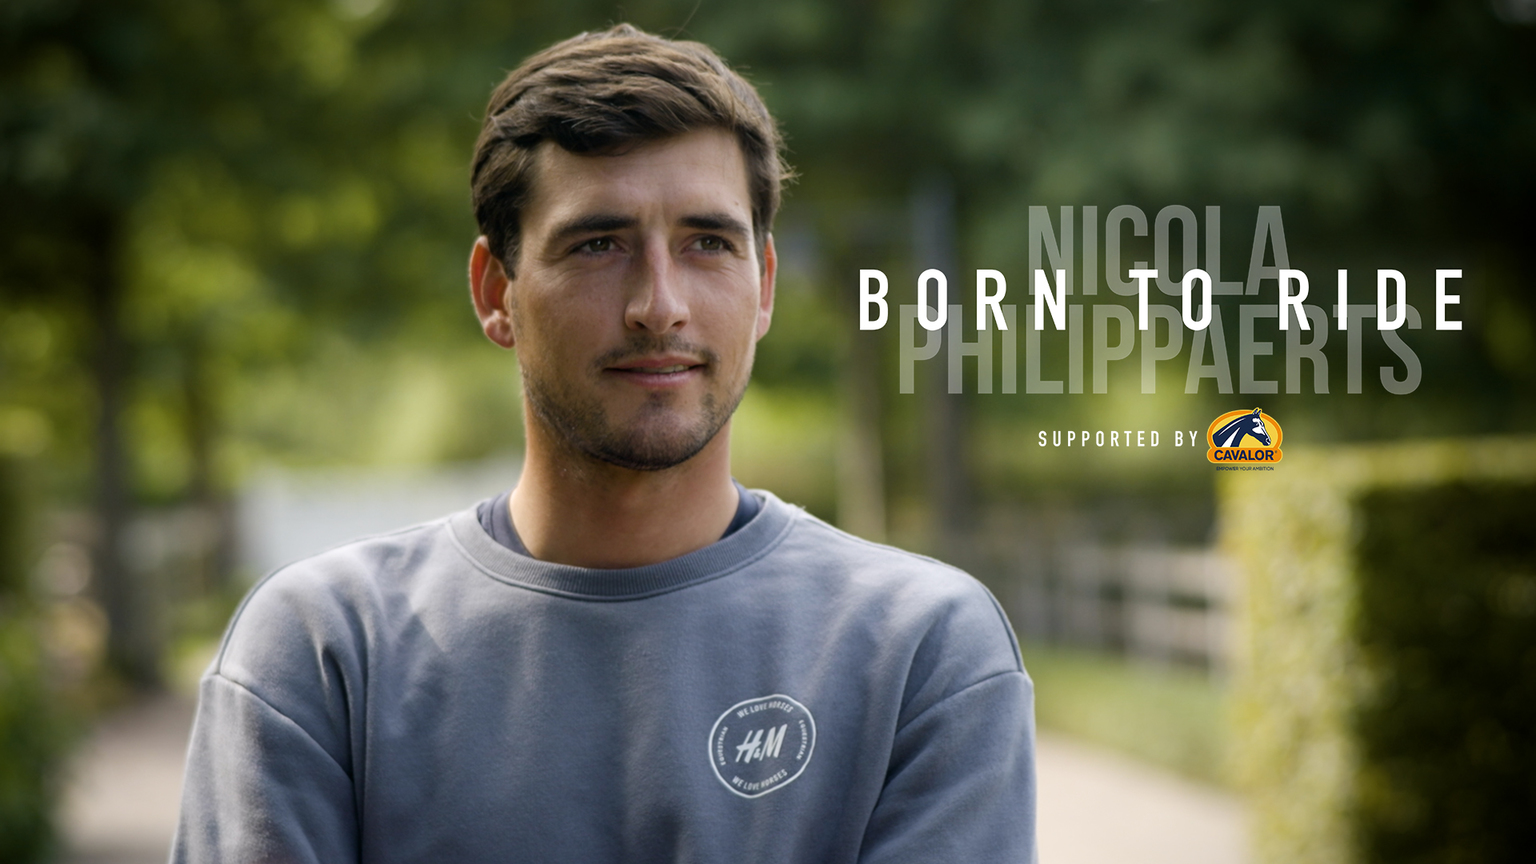 Nicola Philippaerts: Born to Ride